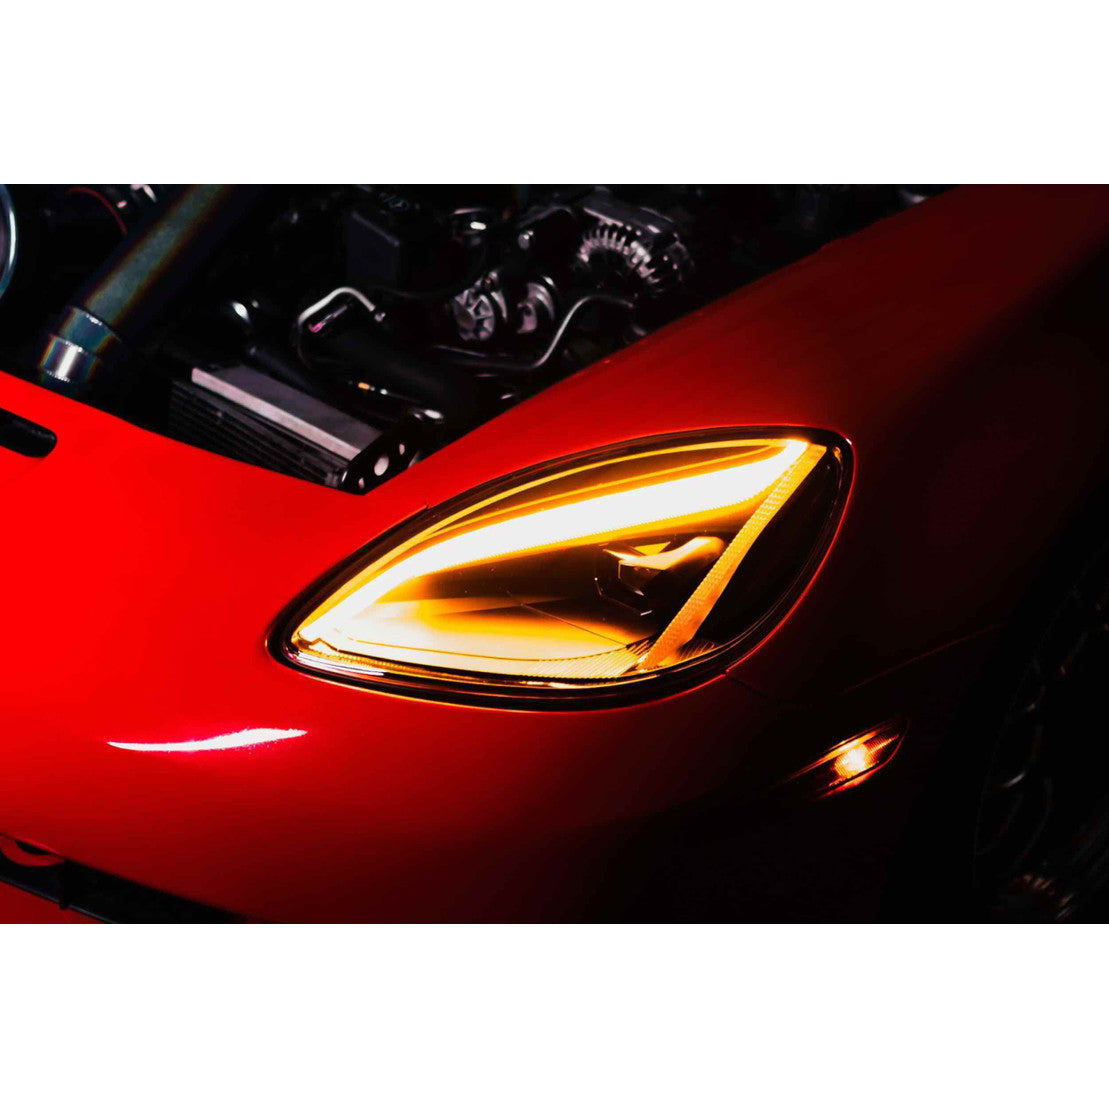 Corvette Headlight - GTR Carbide C8 Style - Led Headlights : 2005-2013 C6, Z06, Grand Sport & ZR1